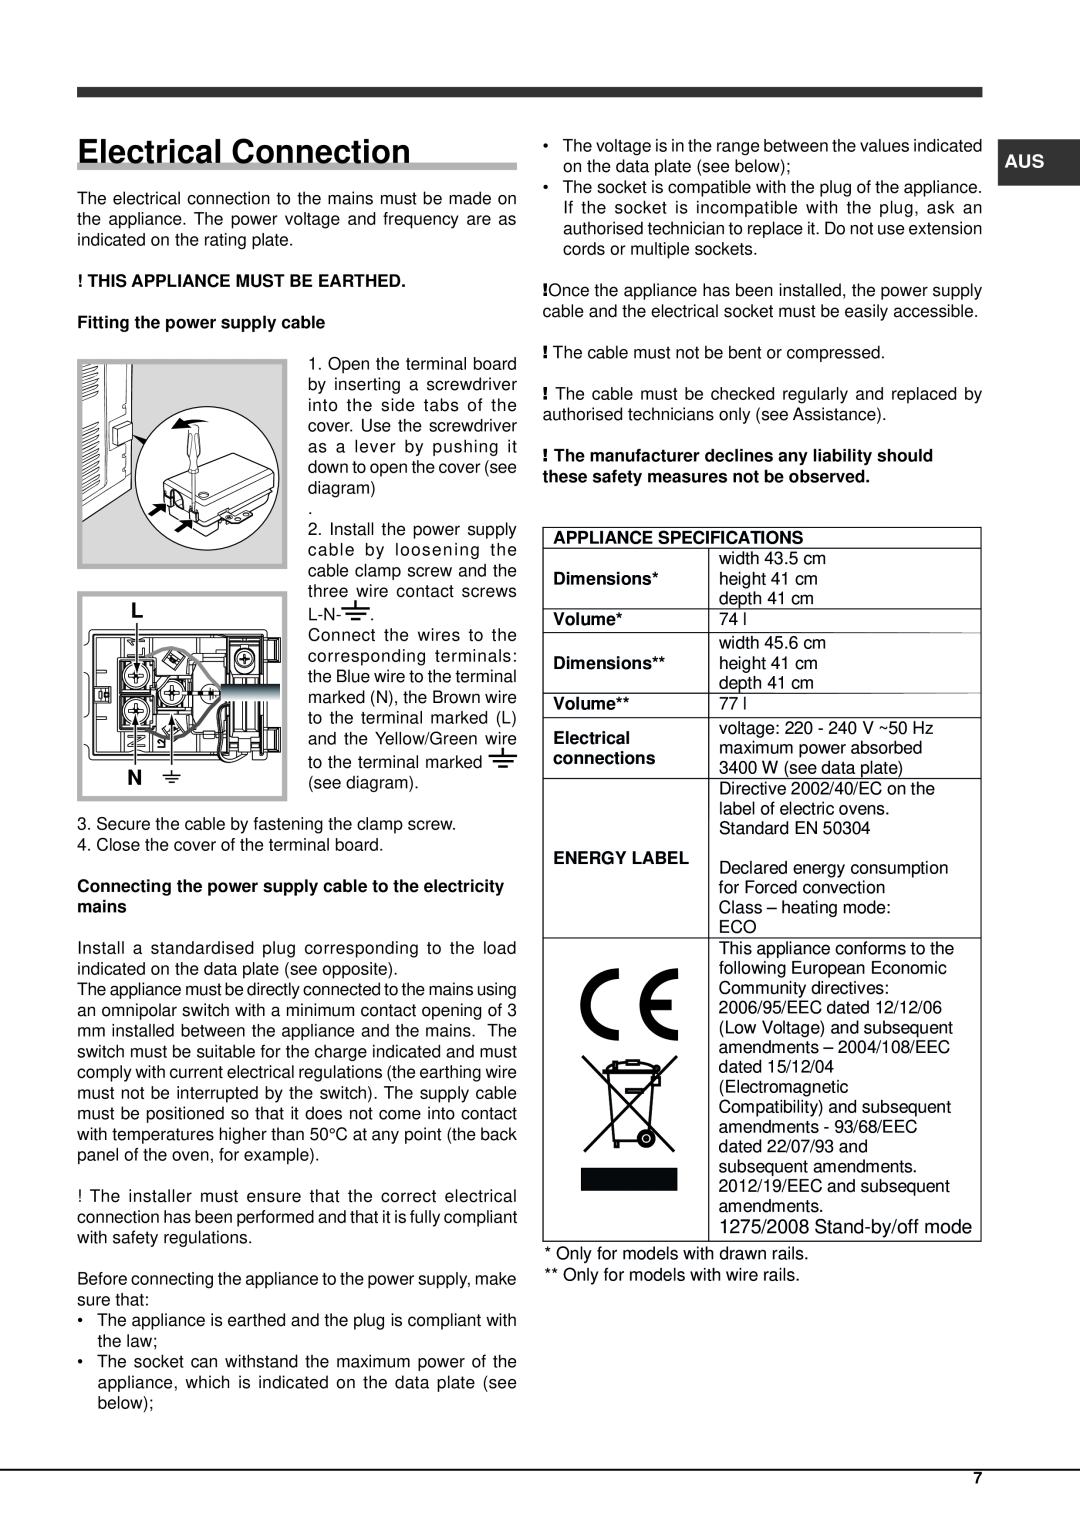 Ariston OK 999EL S D P AUS Electrical Connection, Appliance Specifications, Dimensions, Volume, connections, Energy Label 